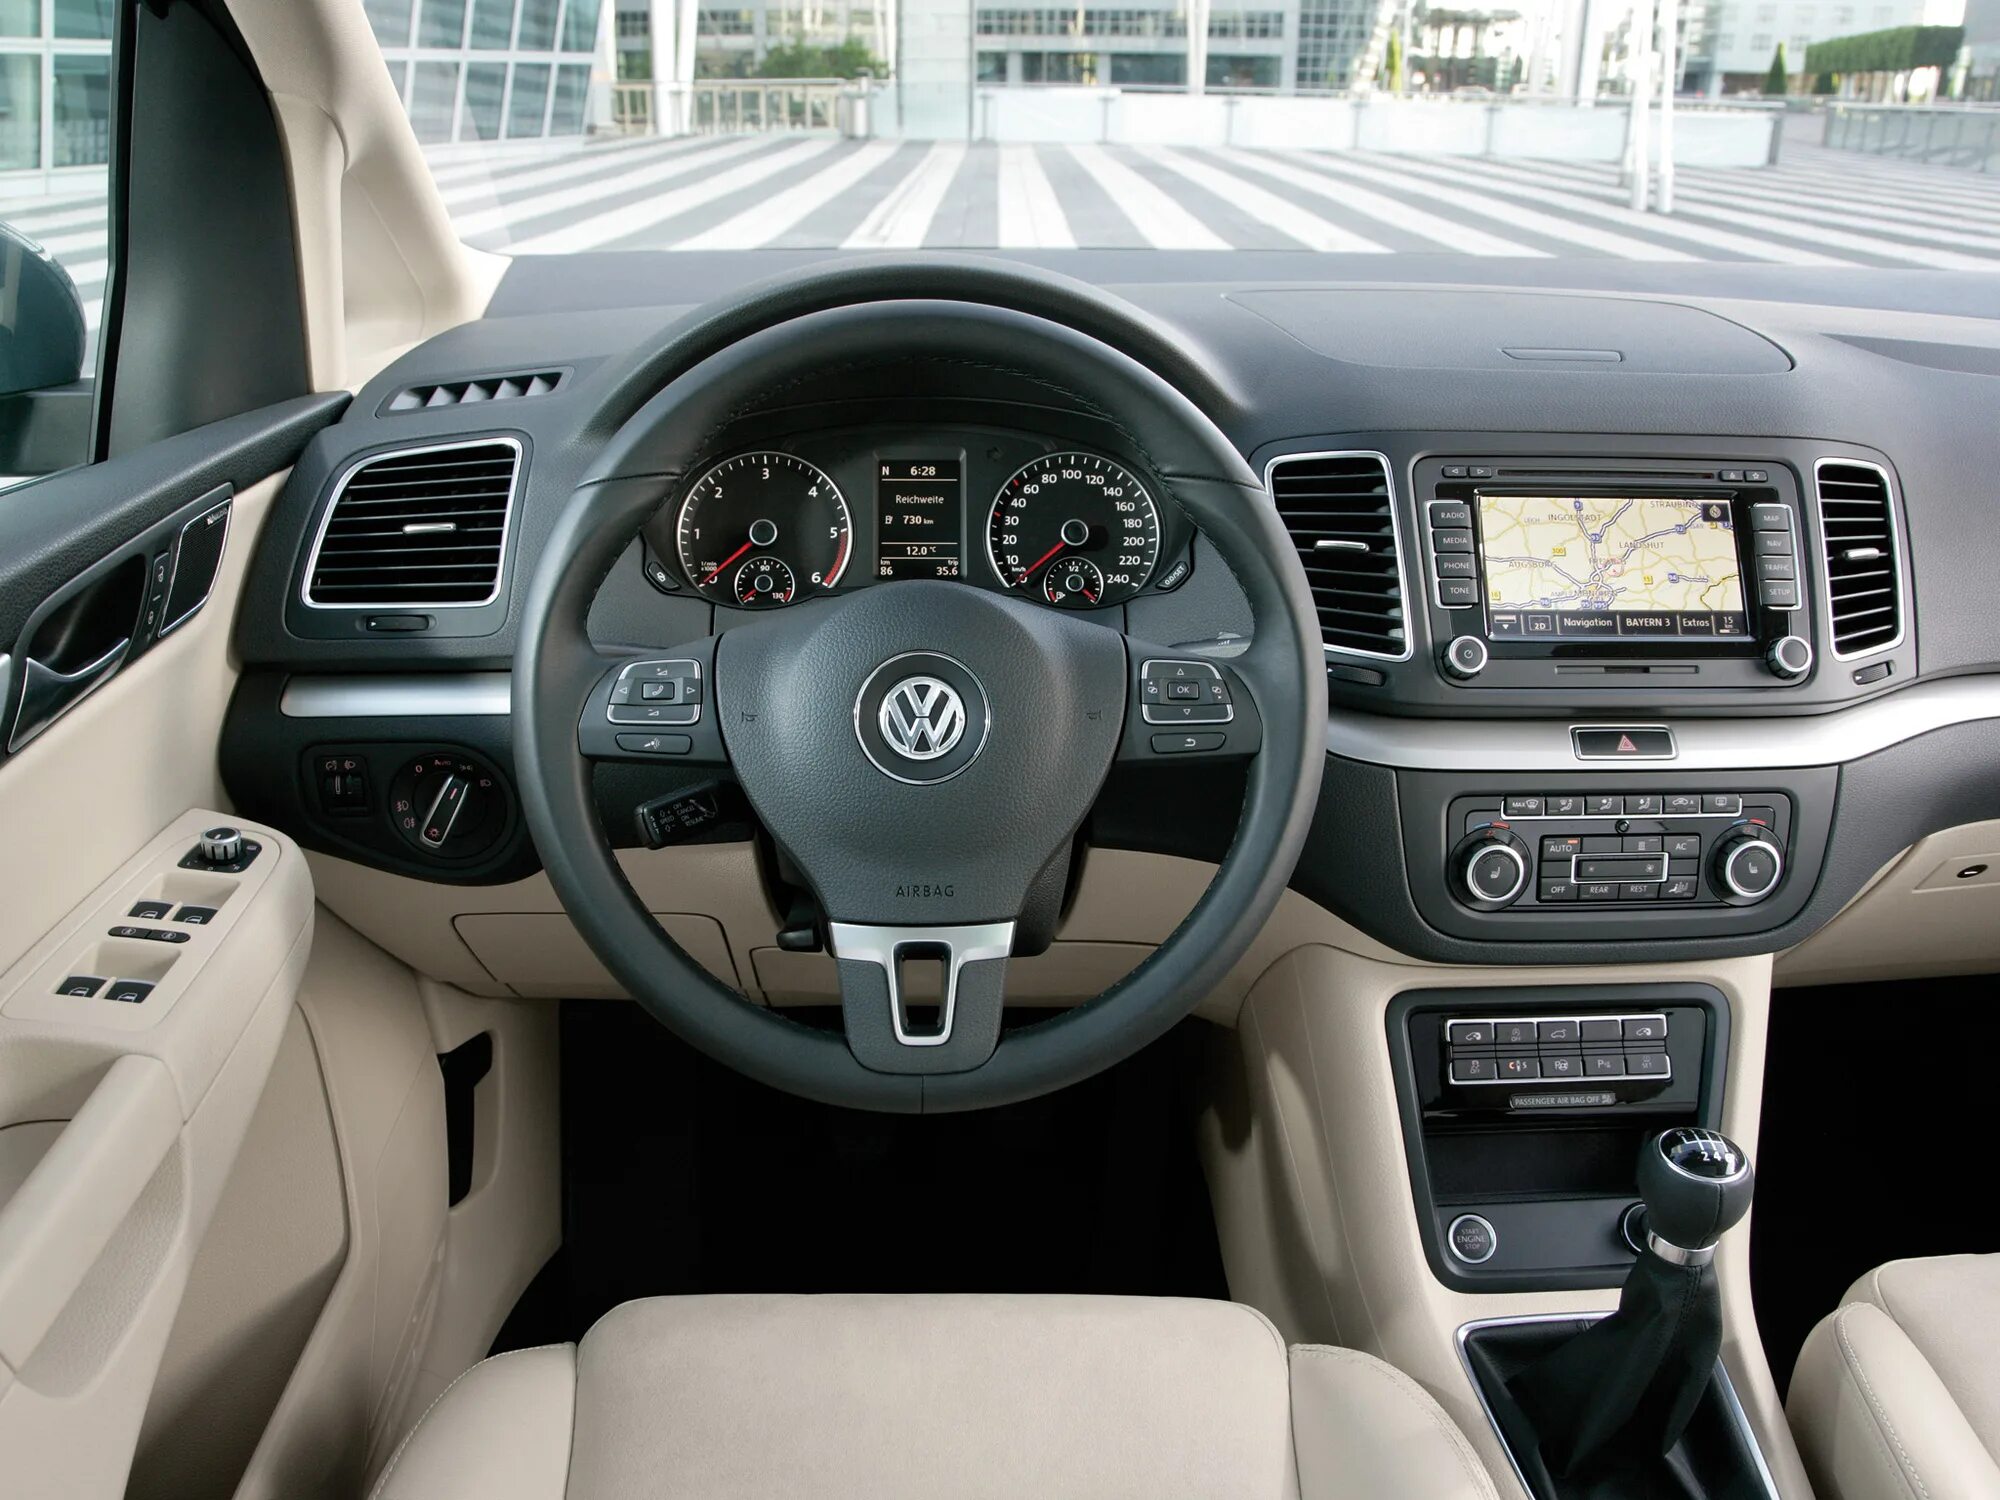 Volkswagen Sharan 2010 года. Фольксваген Шаран 2010. Volkswagen Sharan 2 поколение. Фольксваген Шаран 2011.